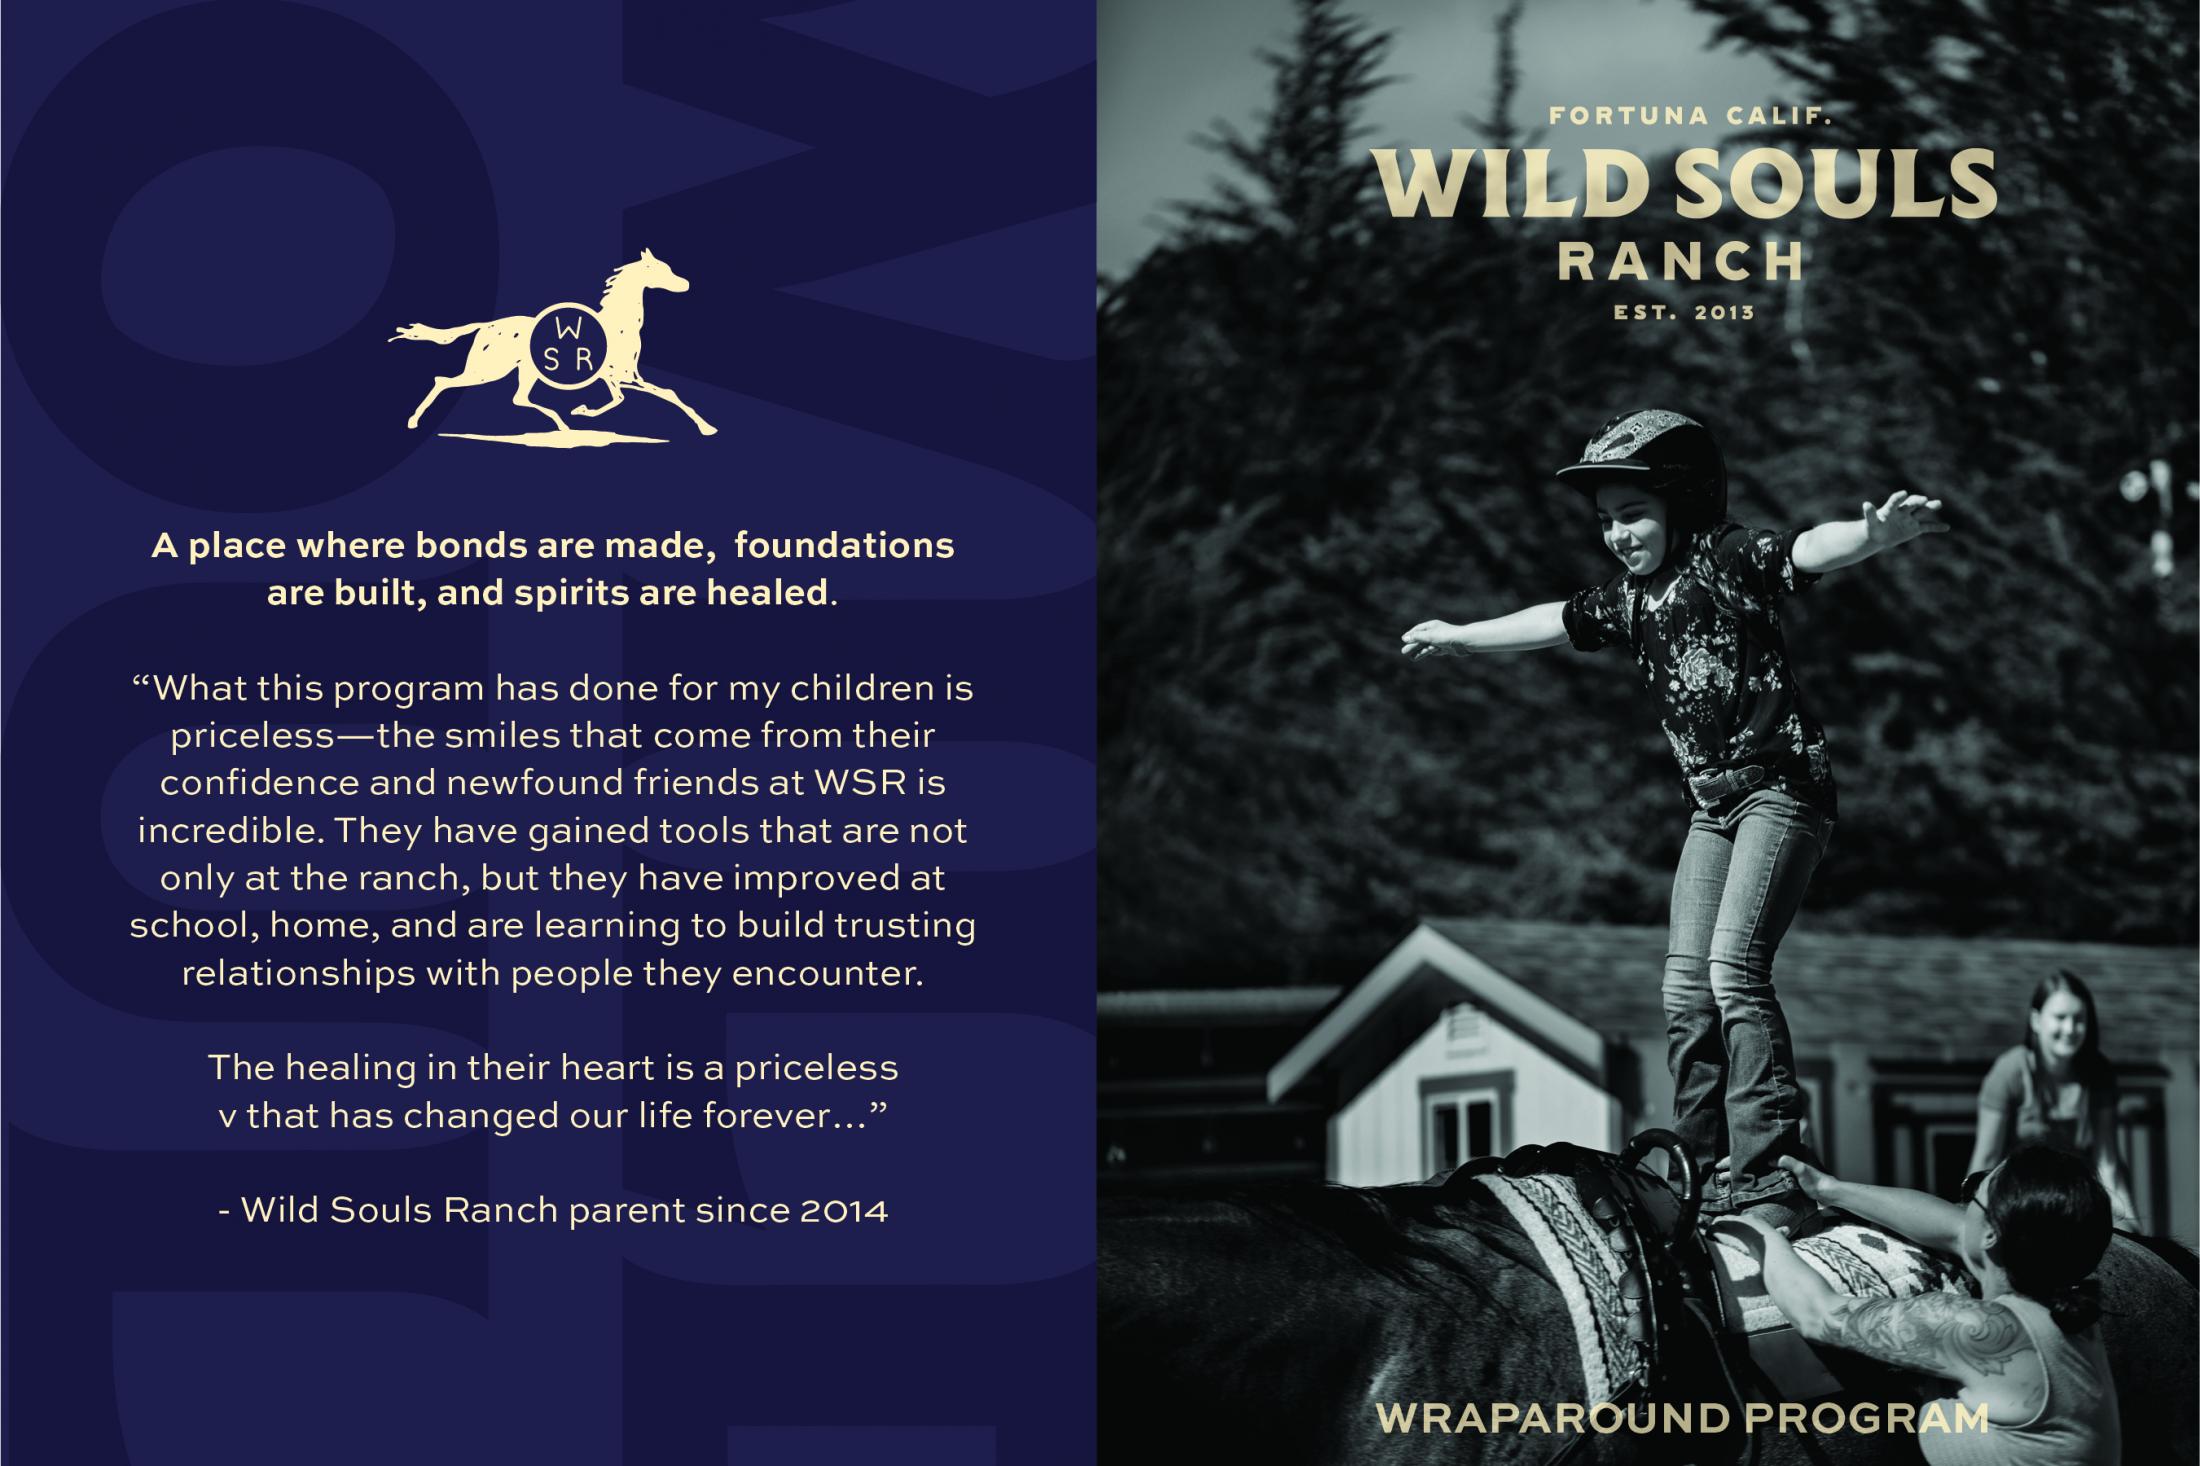 Wild Souls Ranch